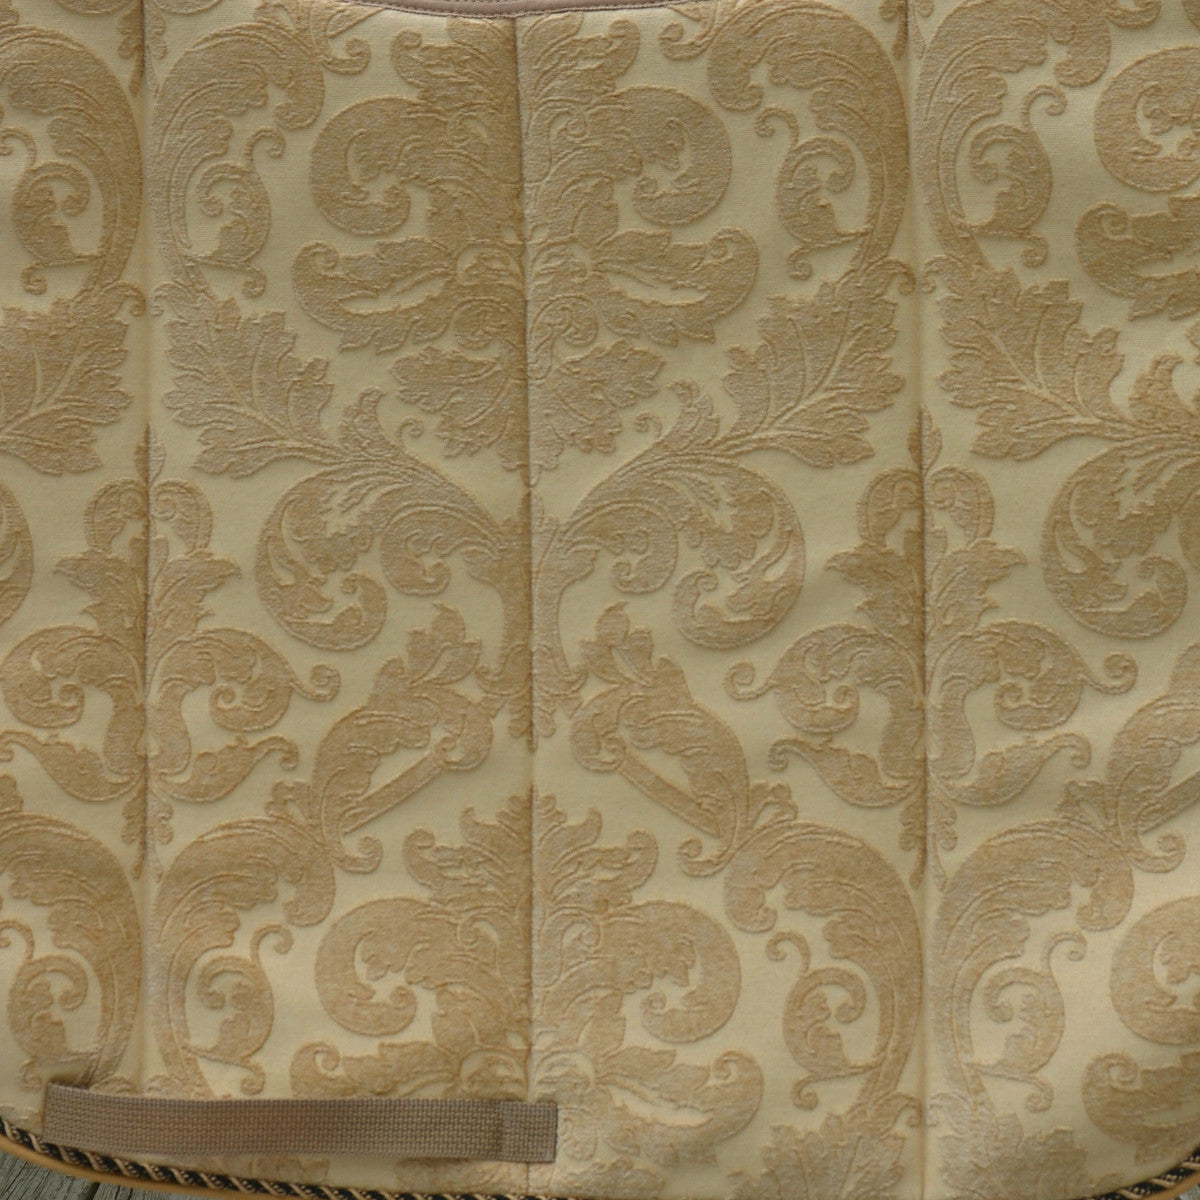 Custom saddle pad